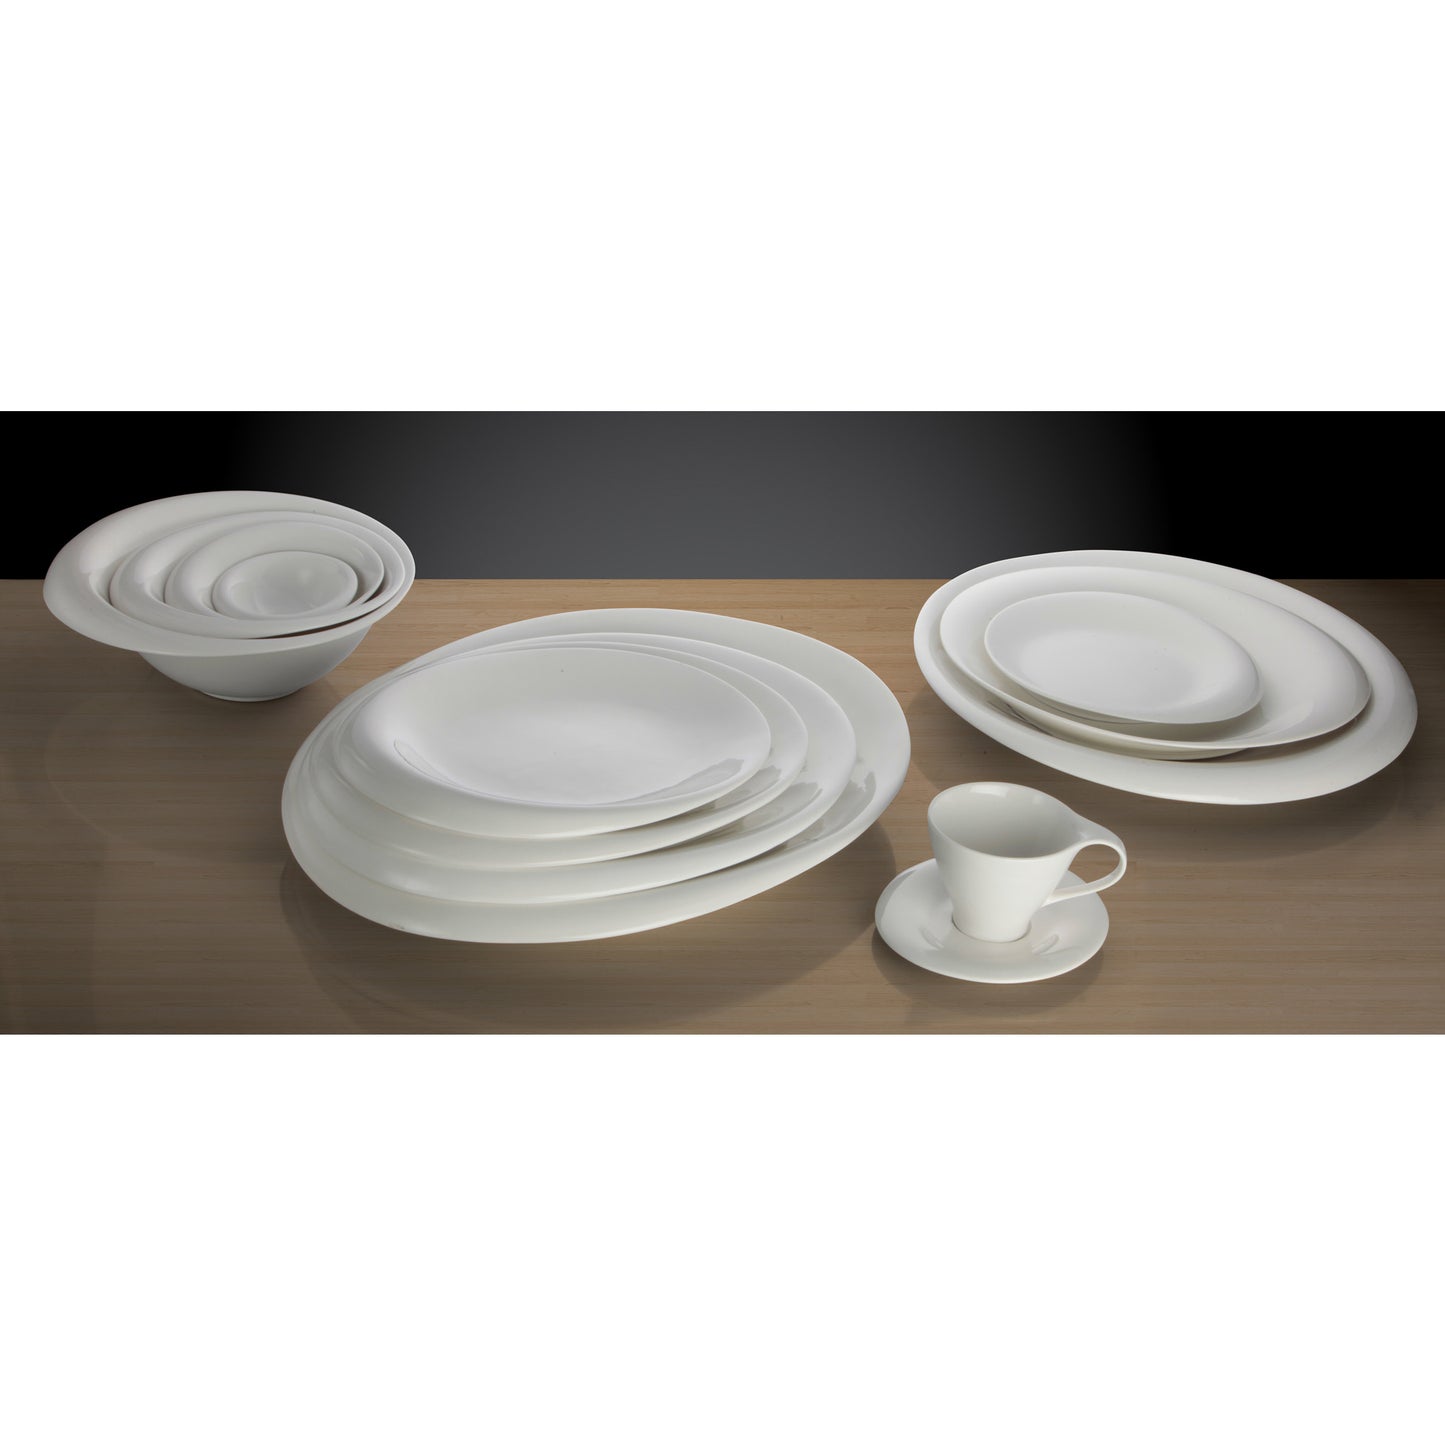 WDP004-201 - 8"Dia. Porcelain Round Plate, Creamy White, 24 pcs/case